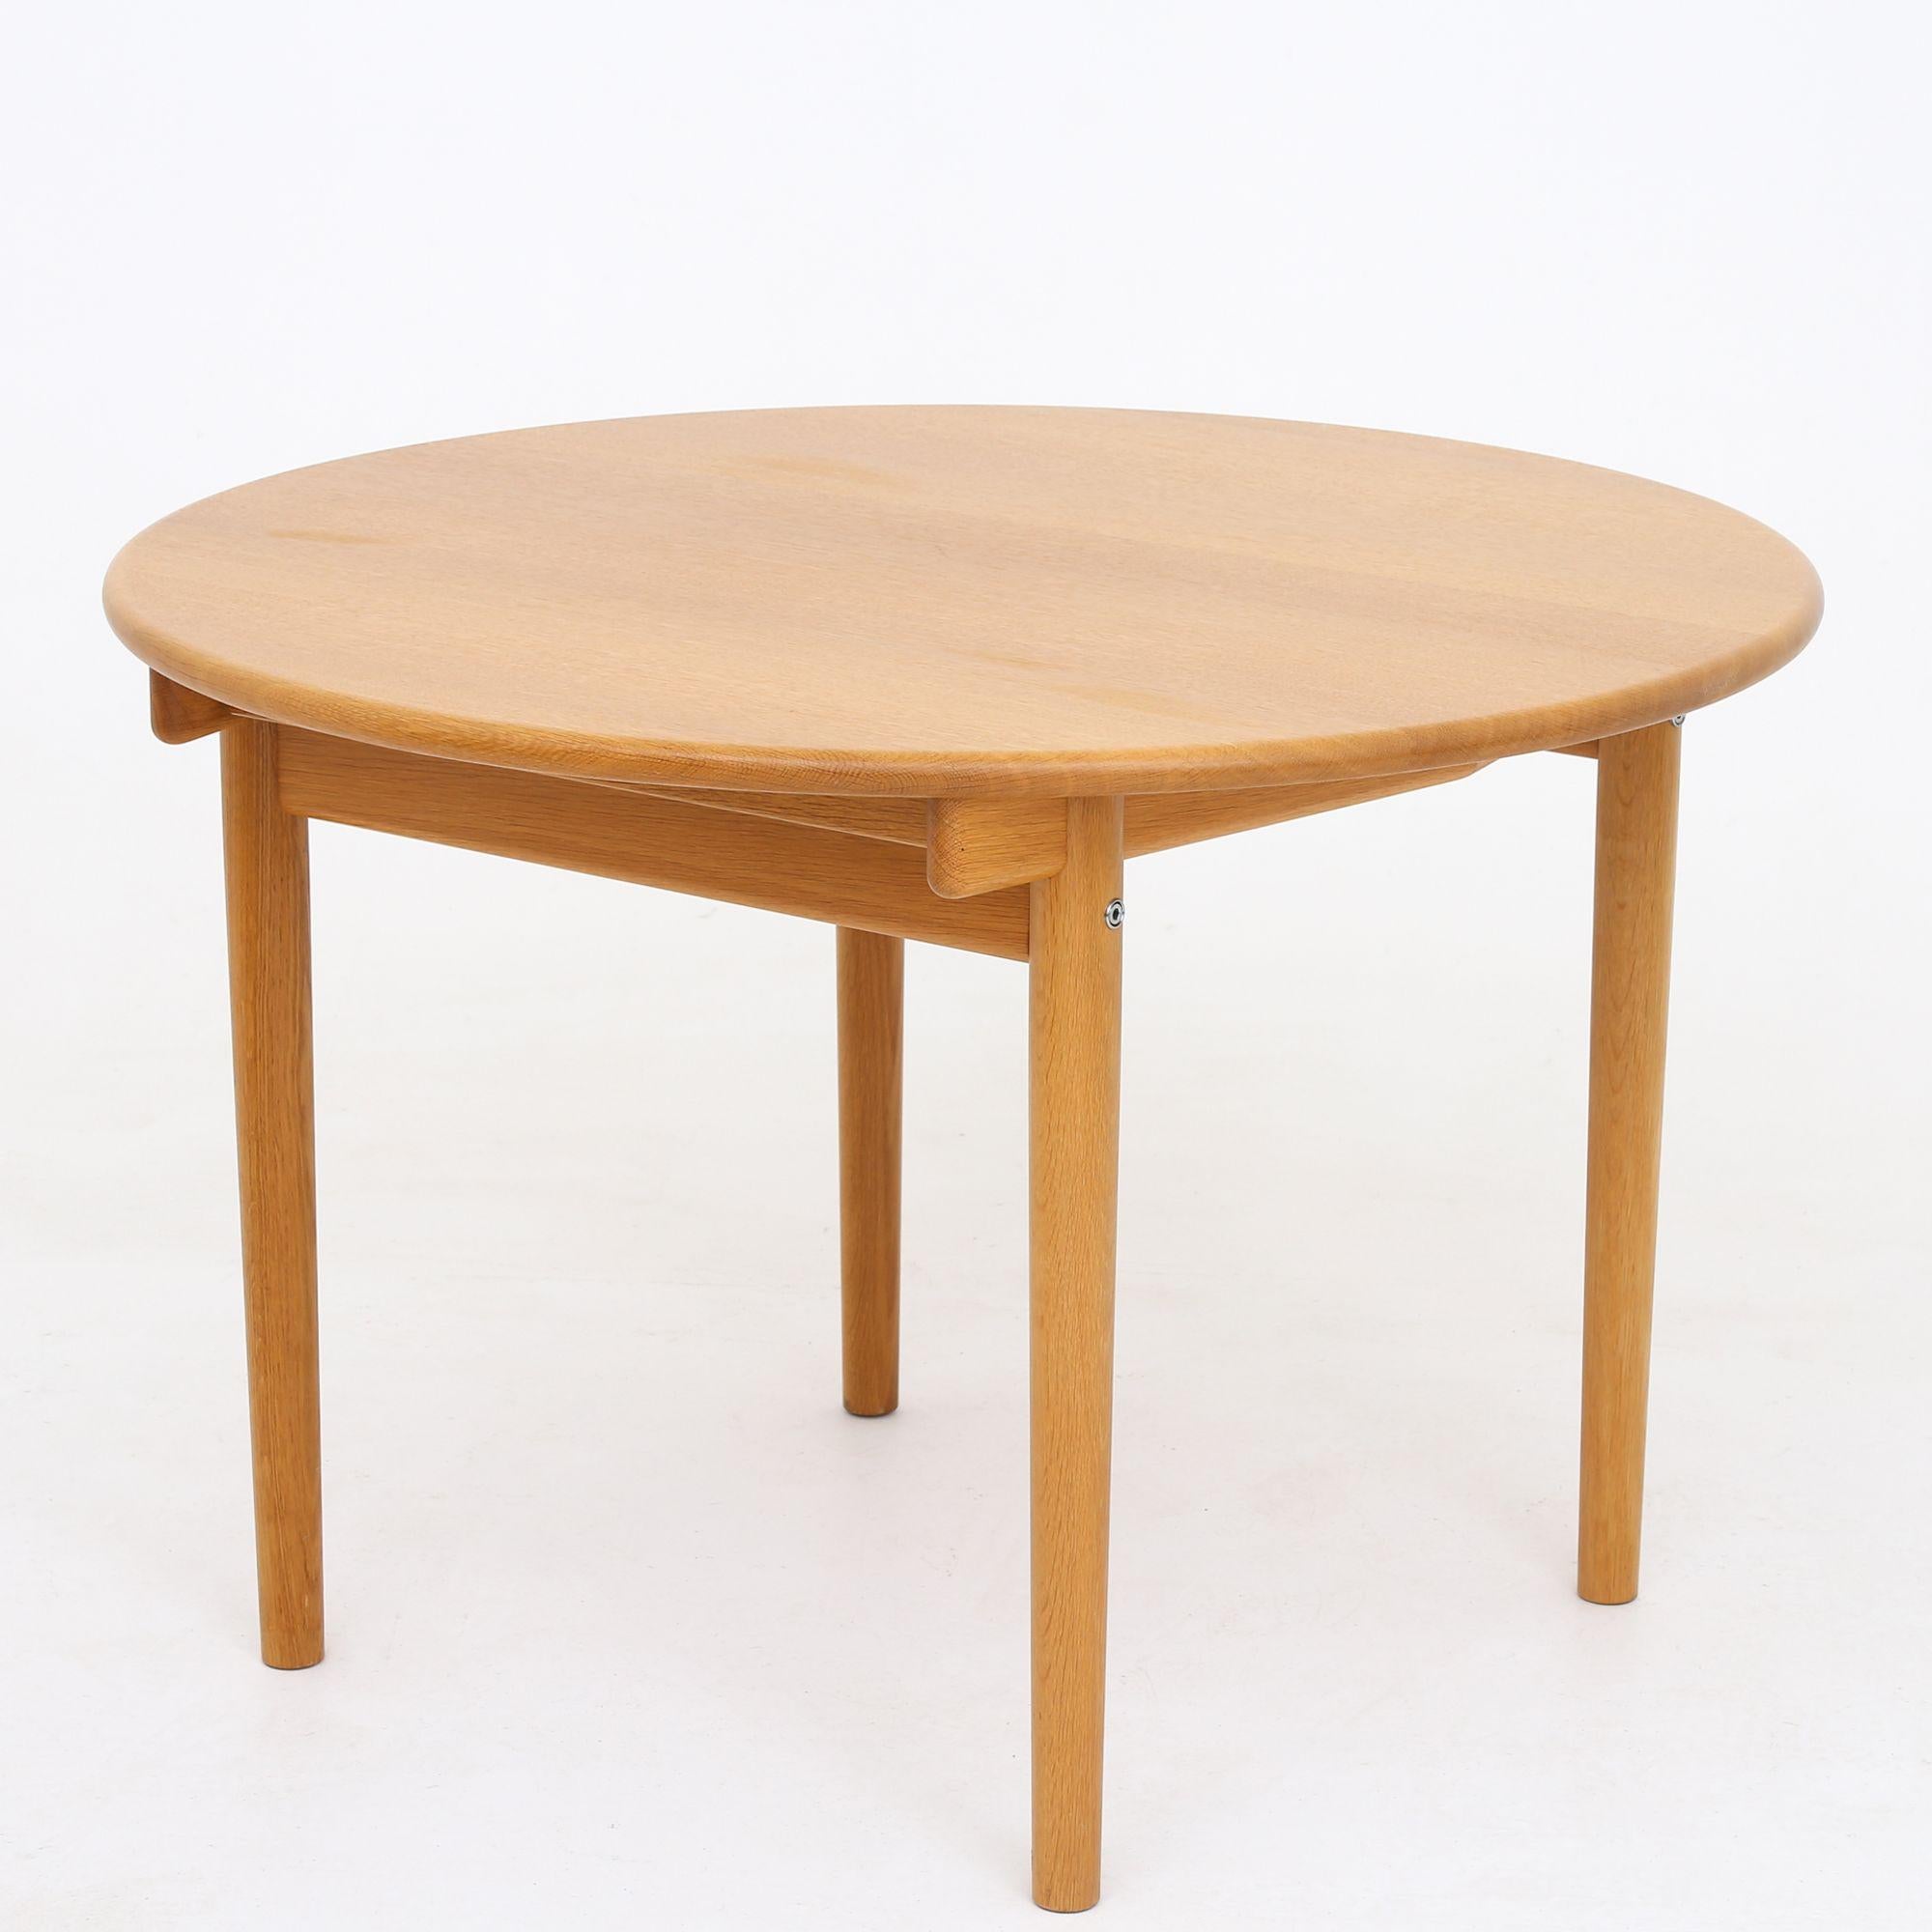 PP 70 - dining table in lacquered, solid oak. Hans J. Wegner / PP Møbler.